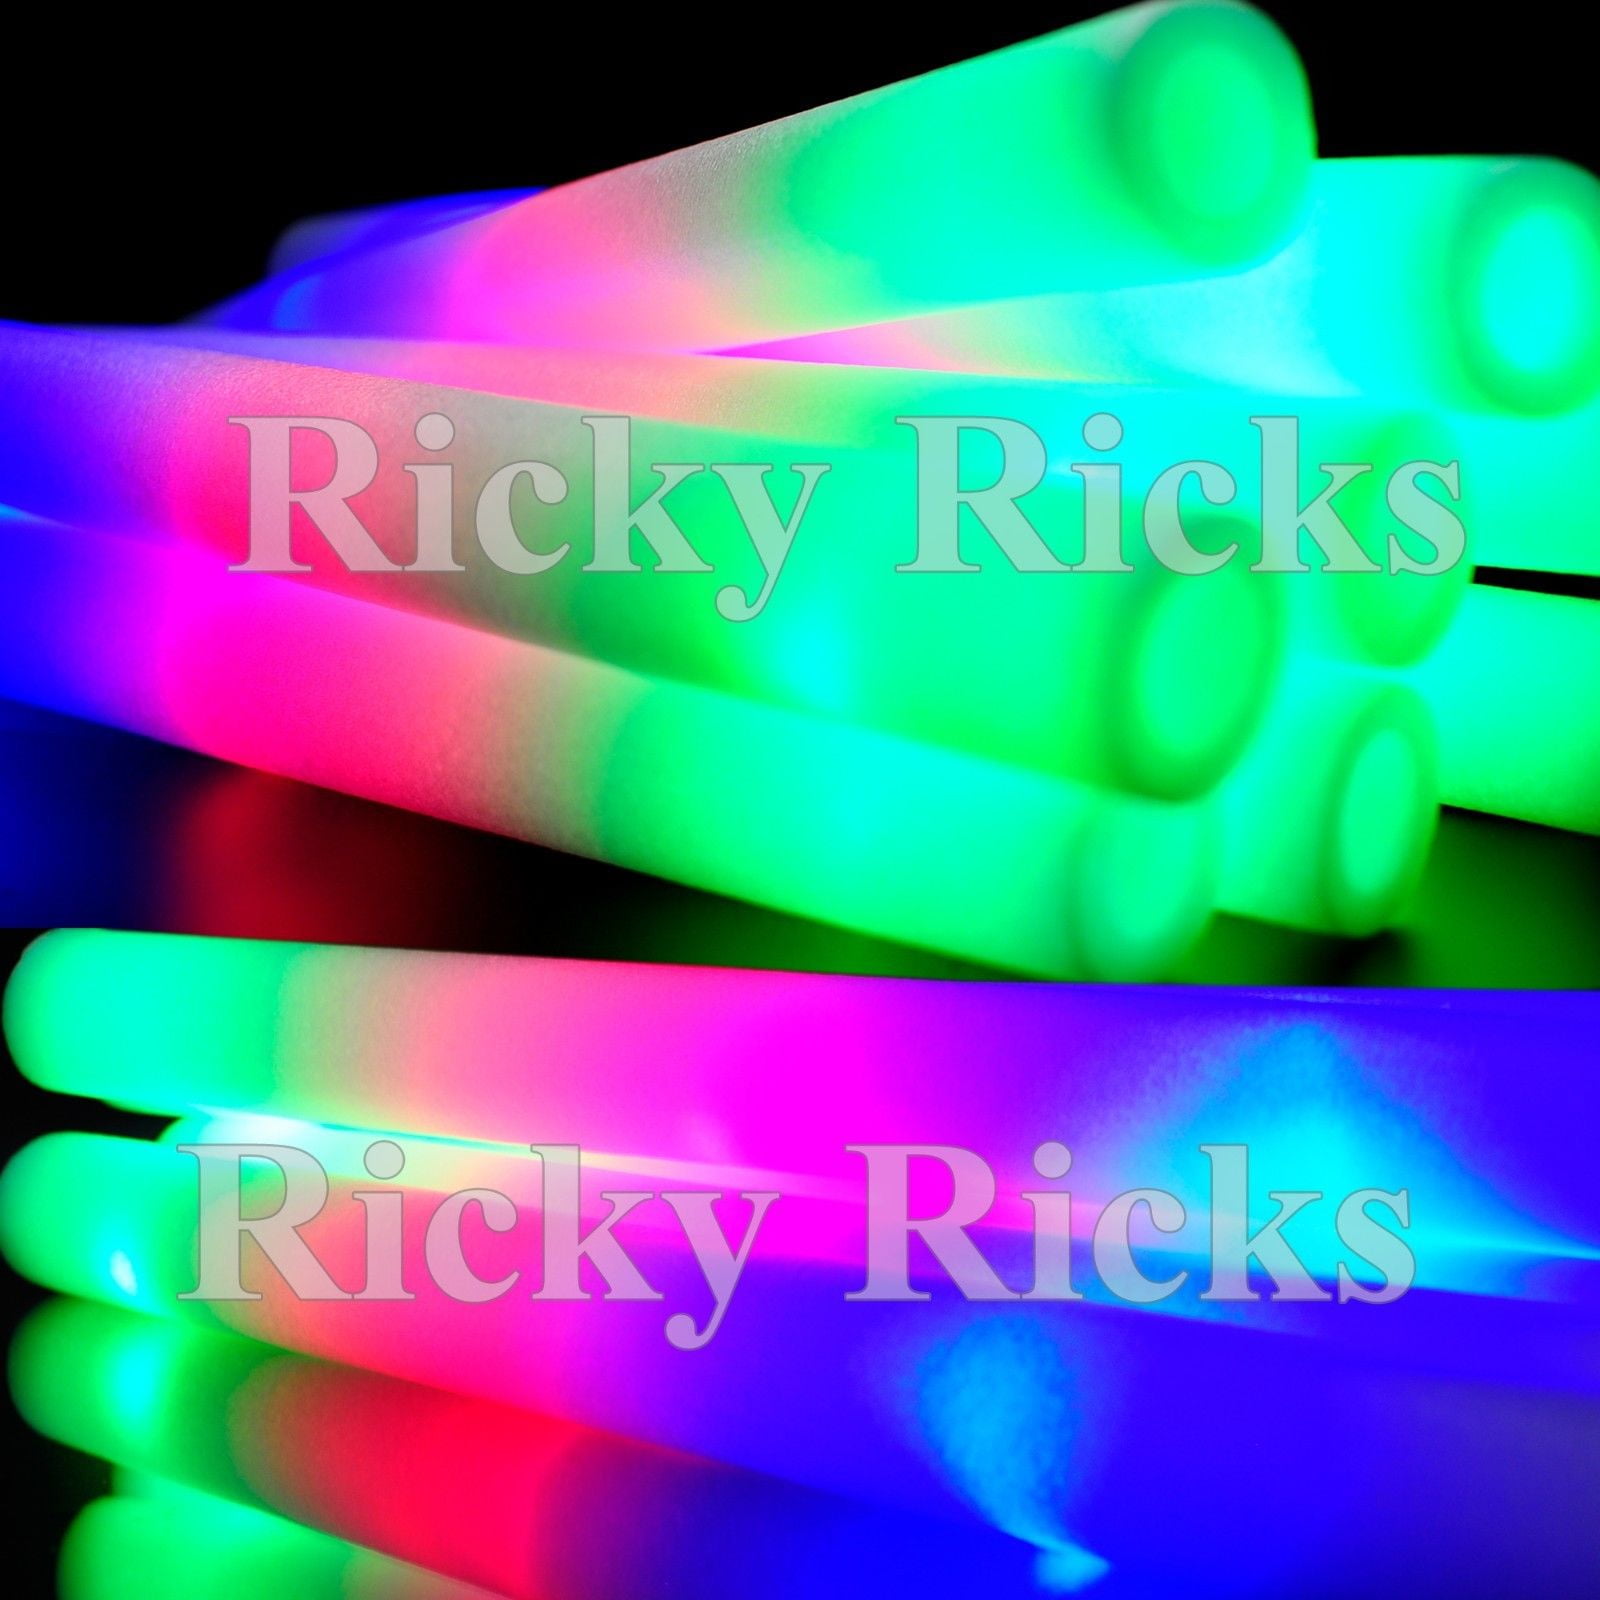 Led Foam Stick Wands Rave Cheer Batons Flashing Light Sticks Color:  Red,blue,green 36pcs 